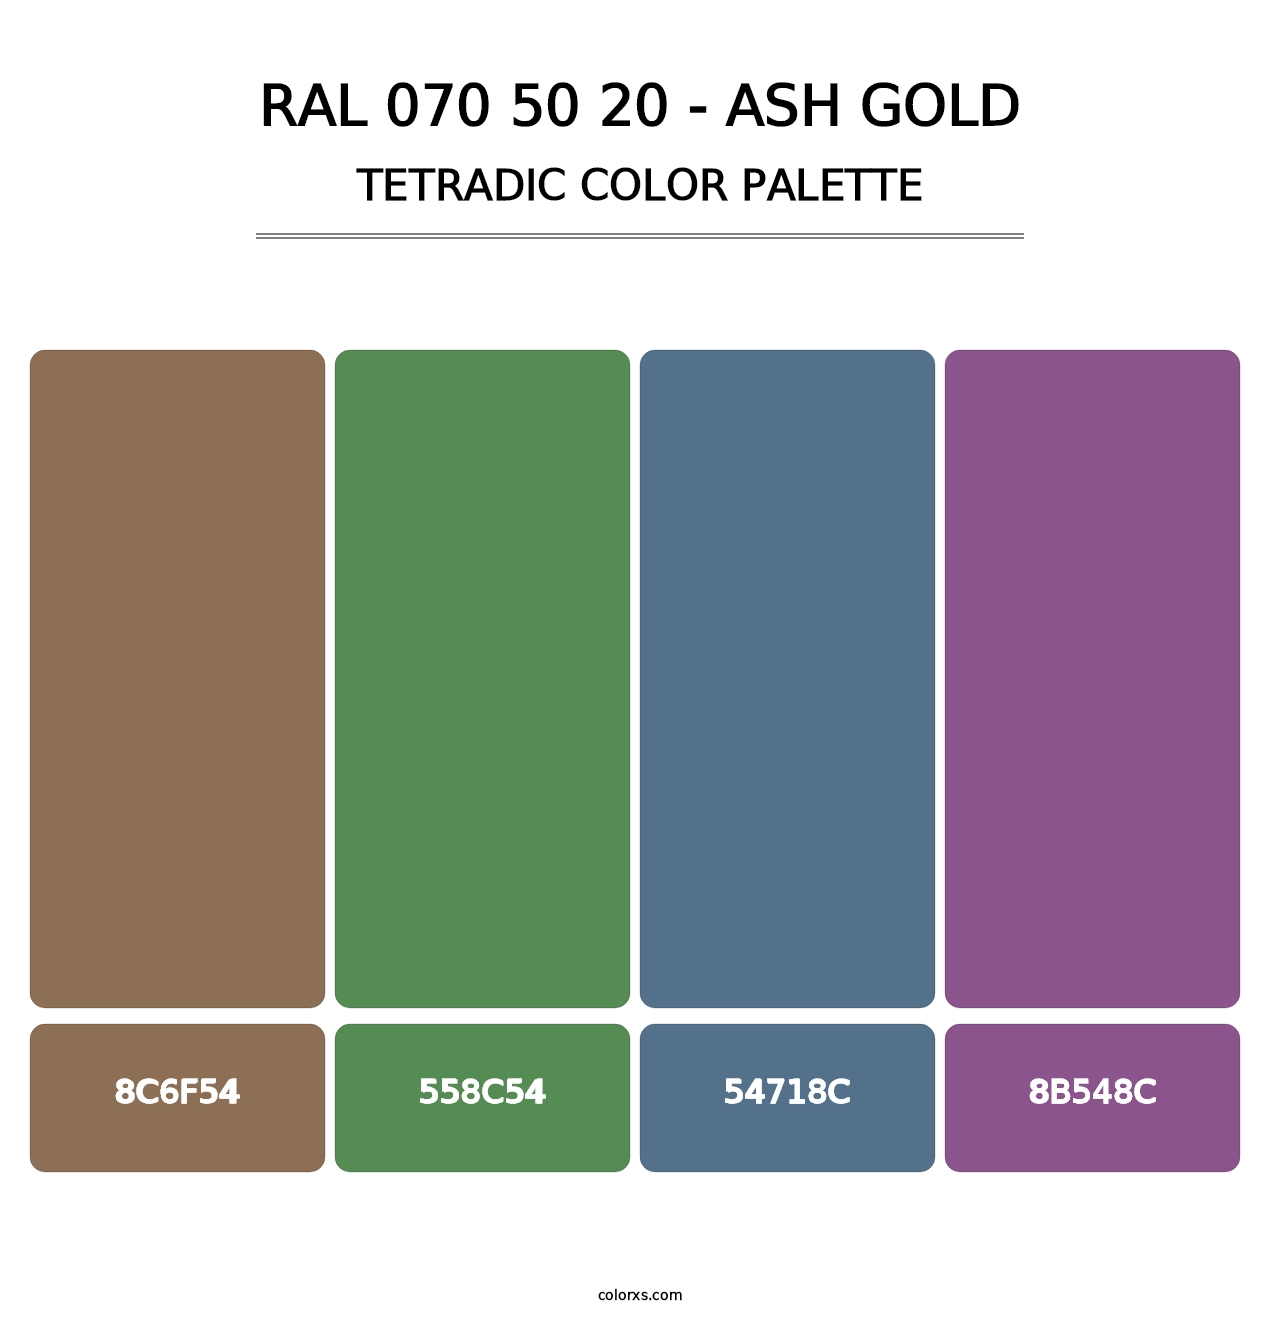 RAL 070 50 20 - Ash Gold - Tetradic Color Palette